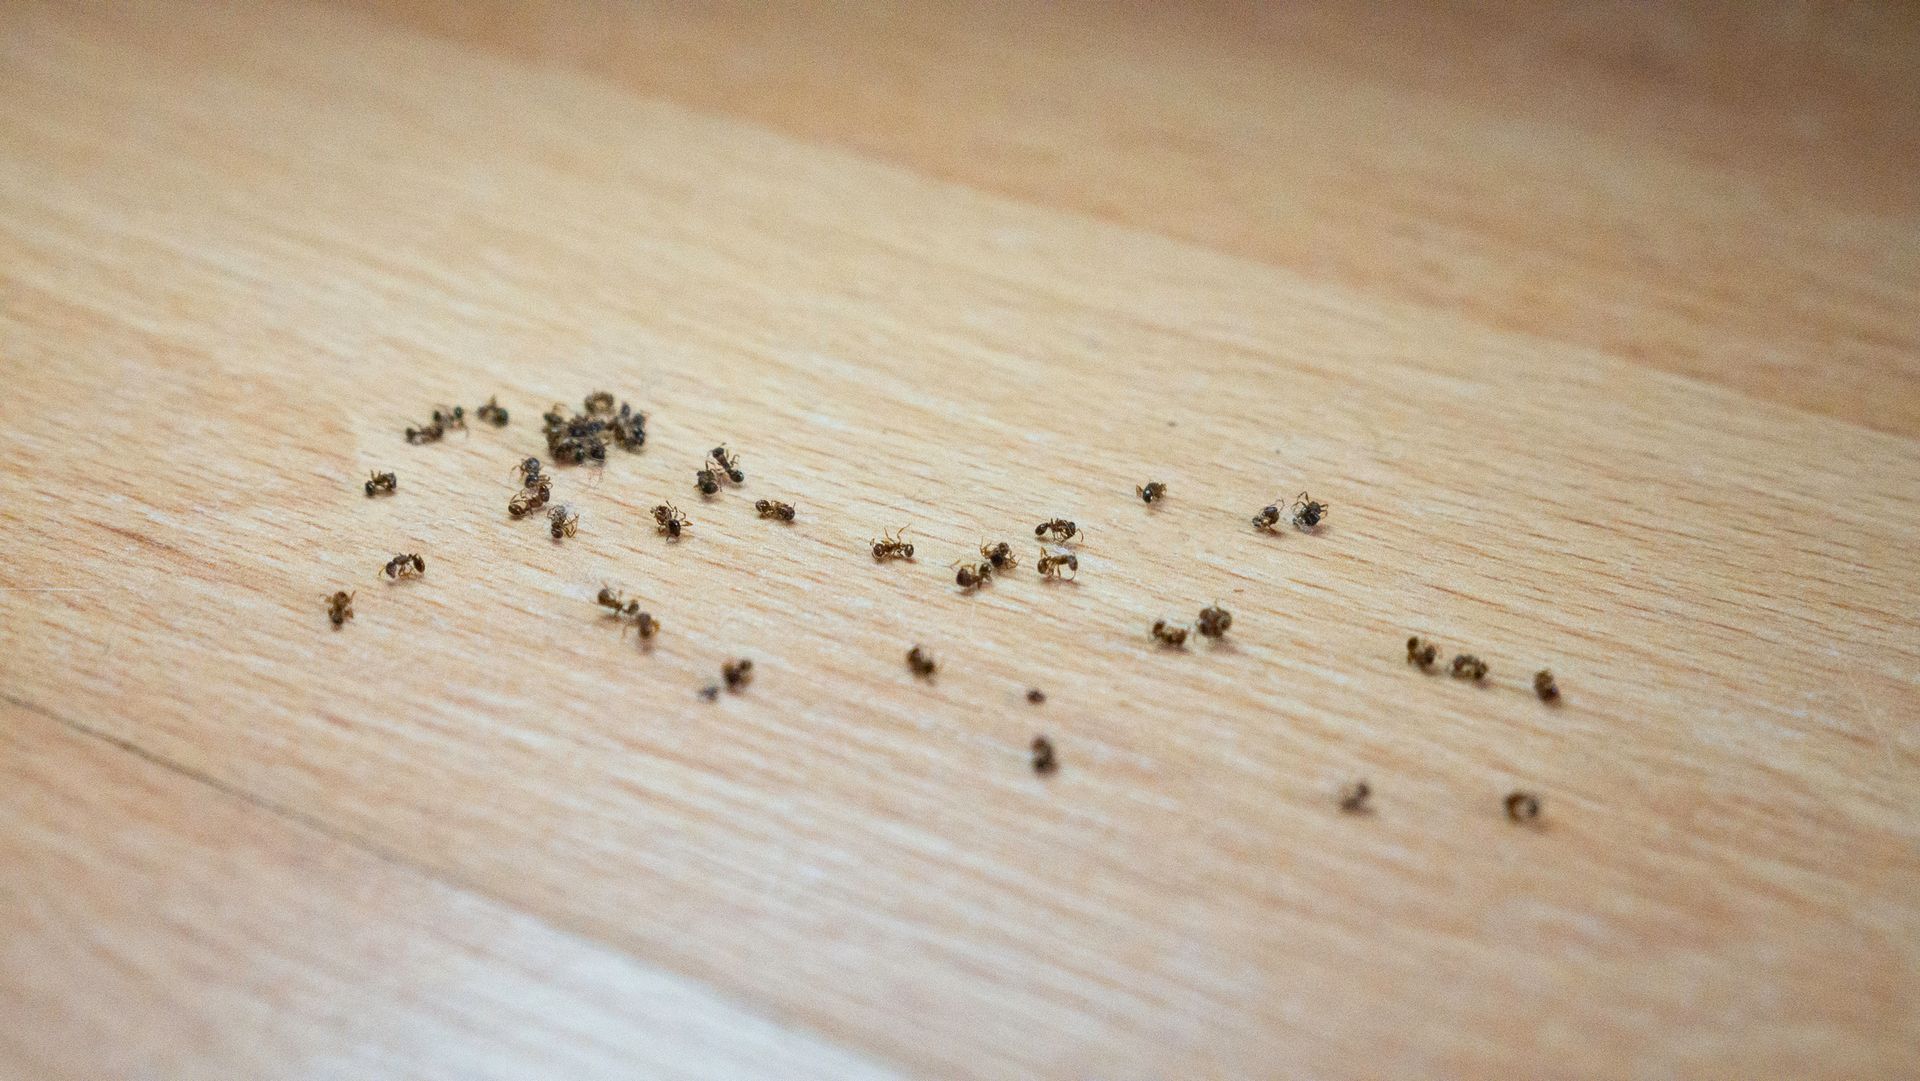 Ants invading house